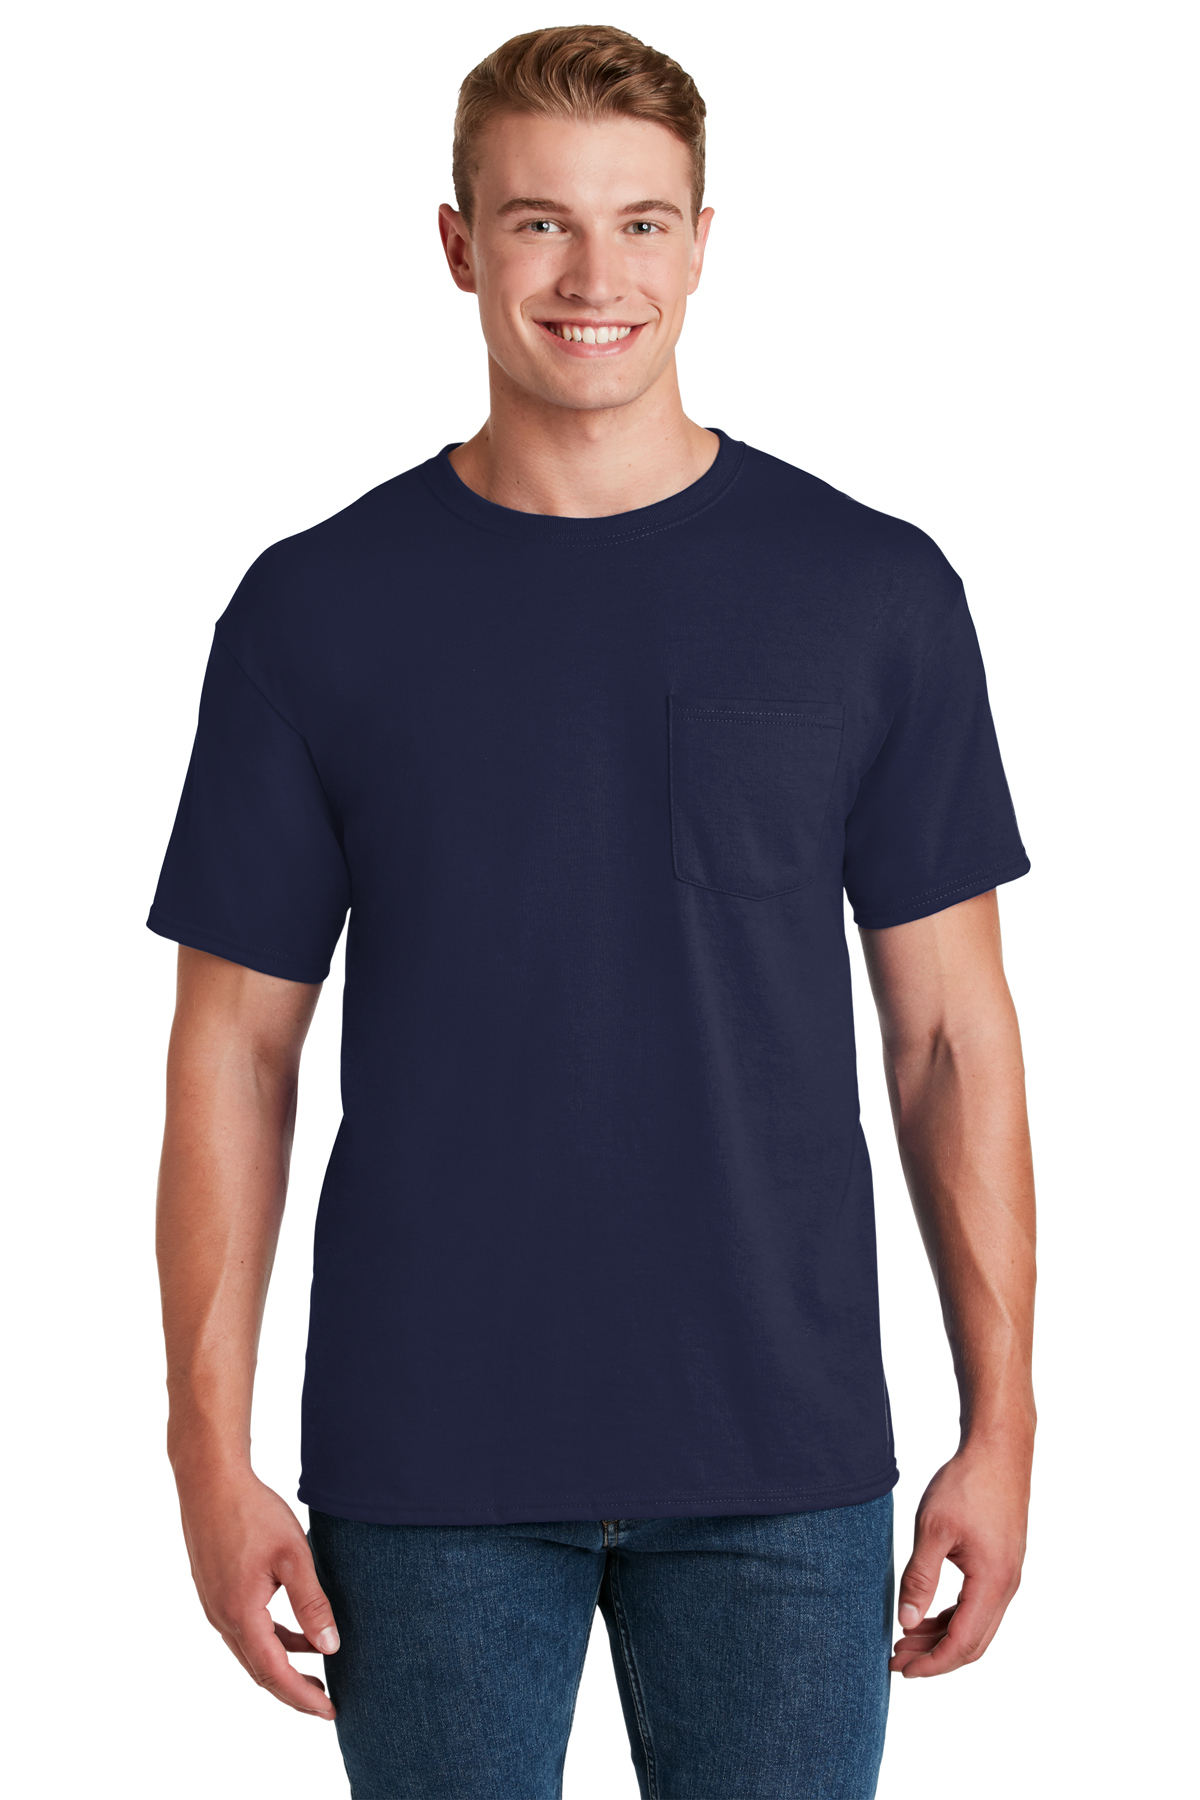 Jerzees - Dri-Power 50/50 Cotton/Poly Pocket T-Shirt | Product | Online ...